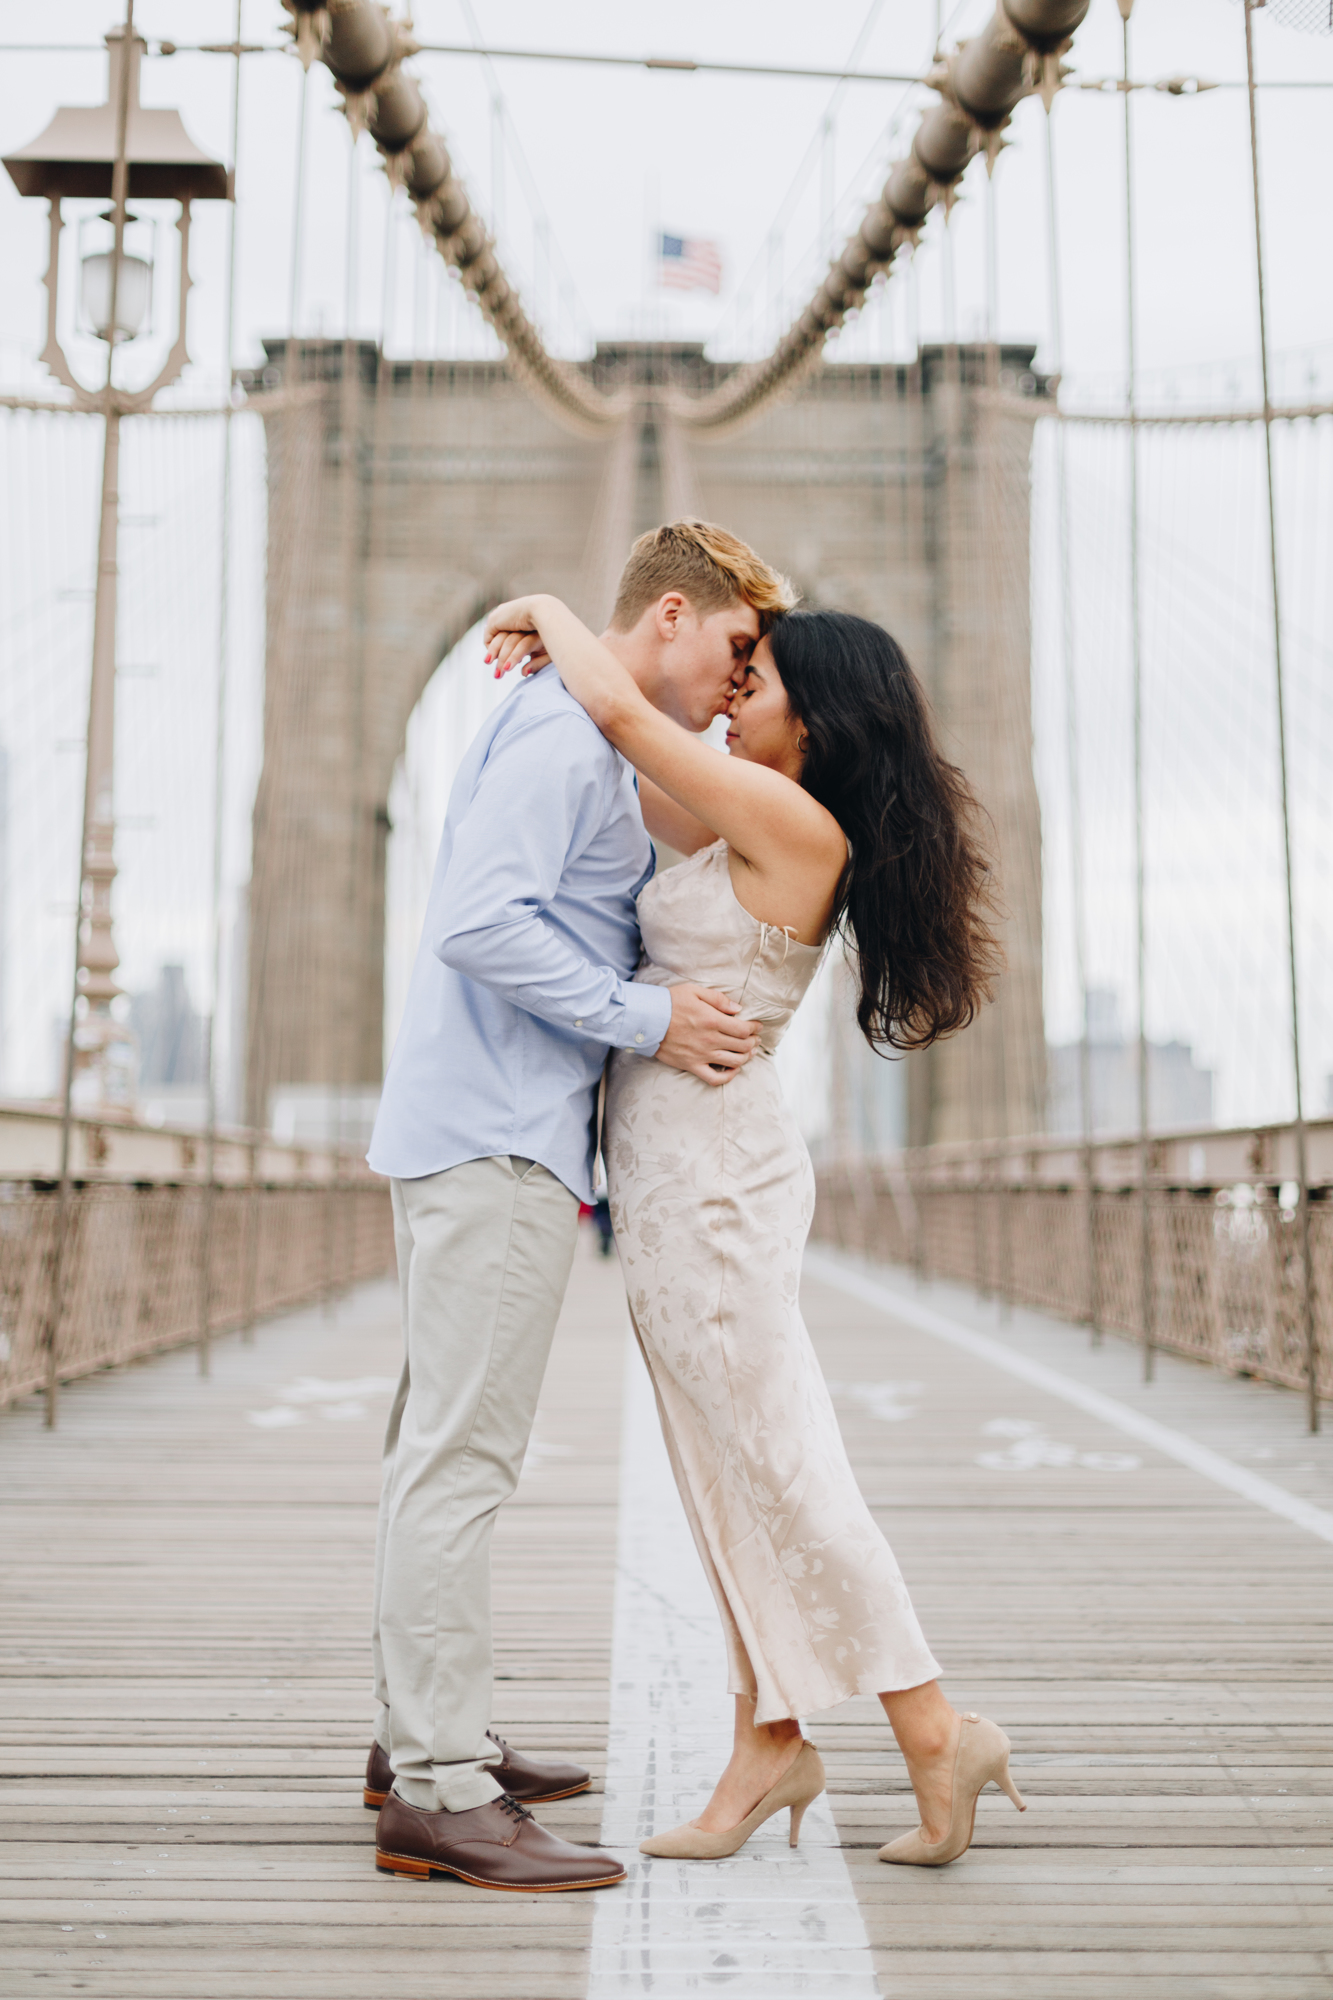 Glamorous Summertime Brooklyn Bridge Engagement Photos